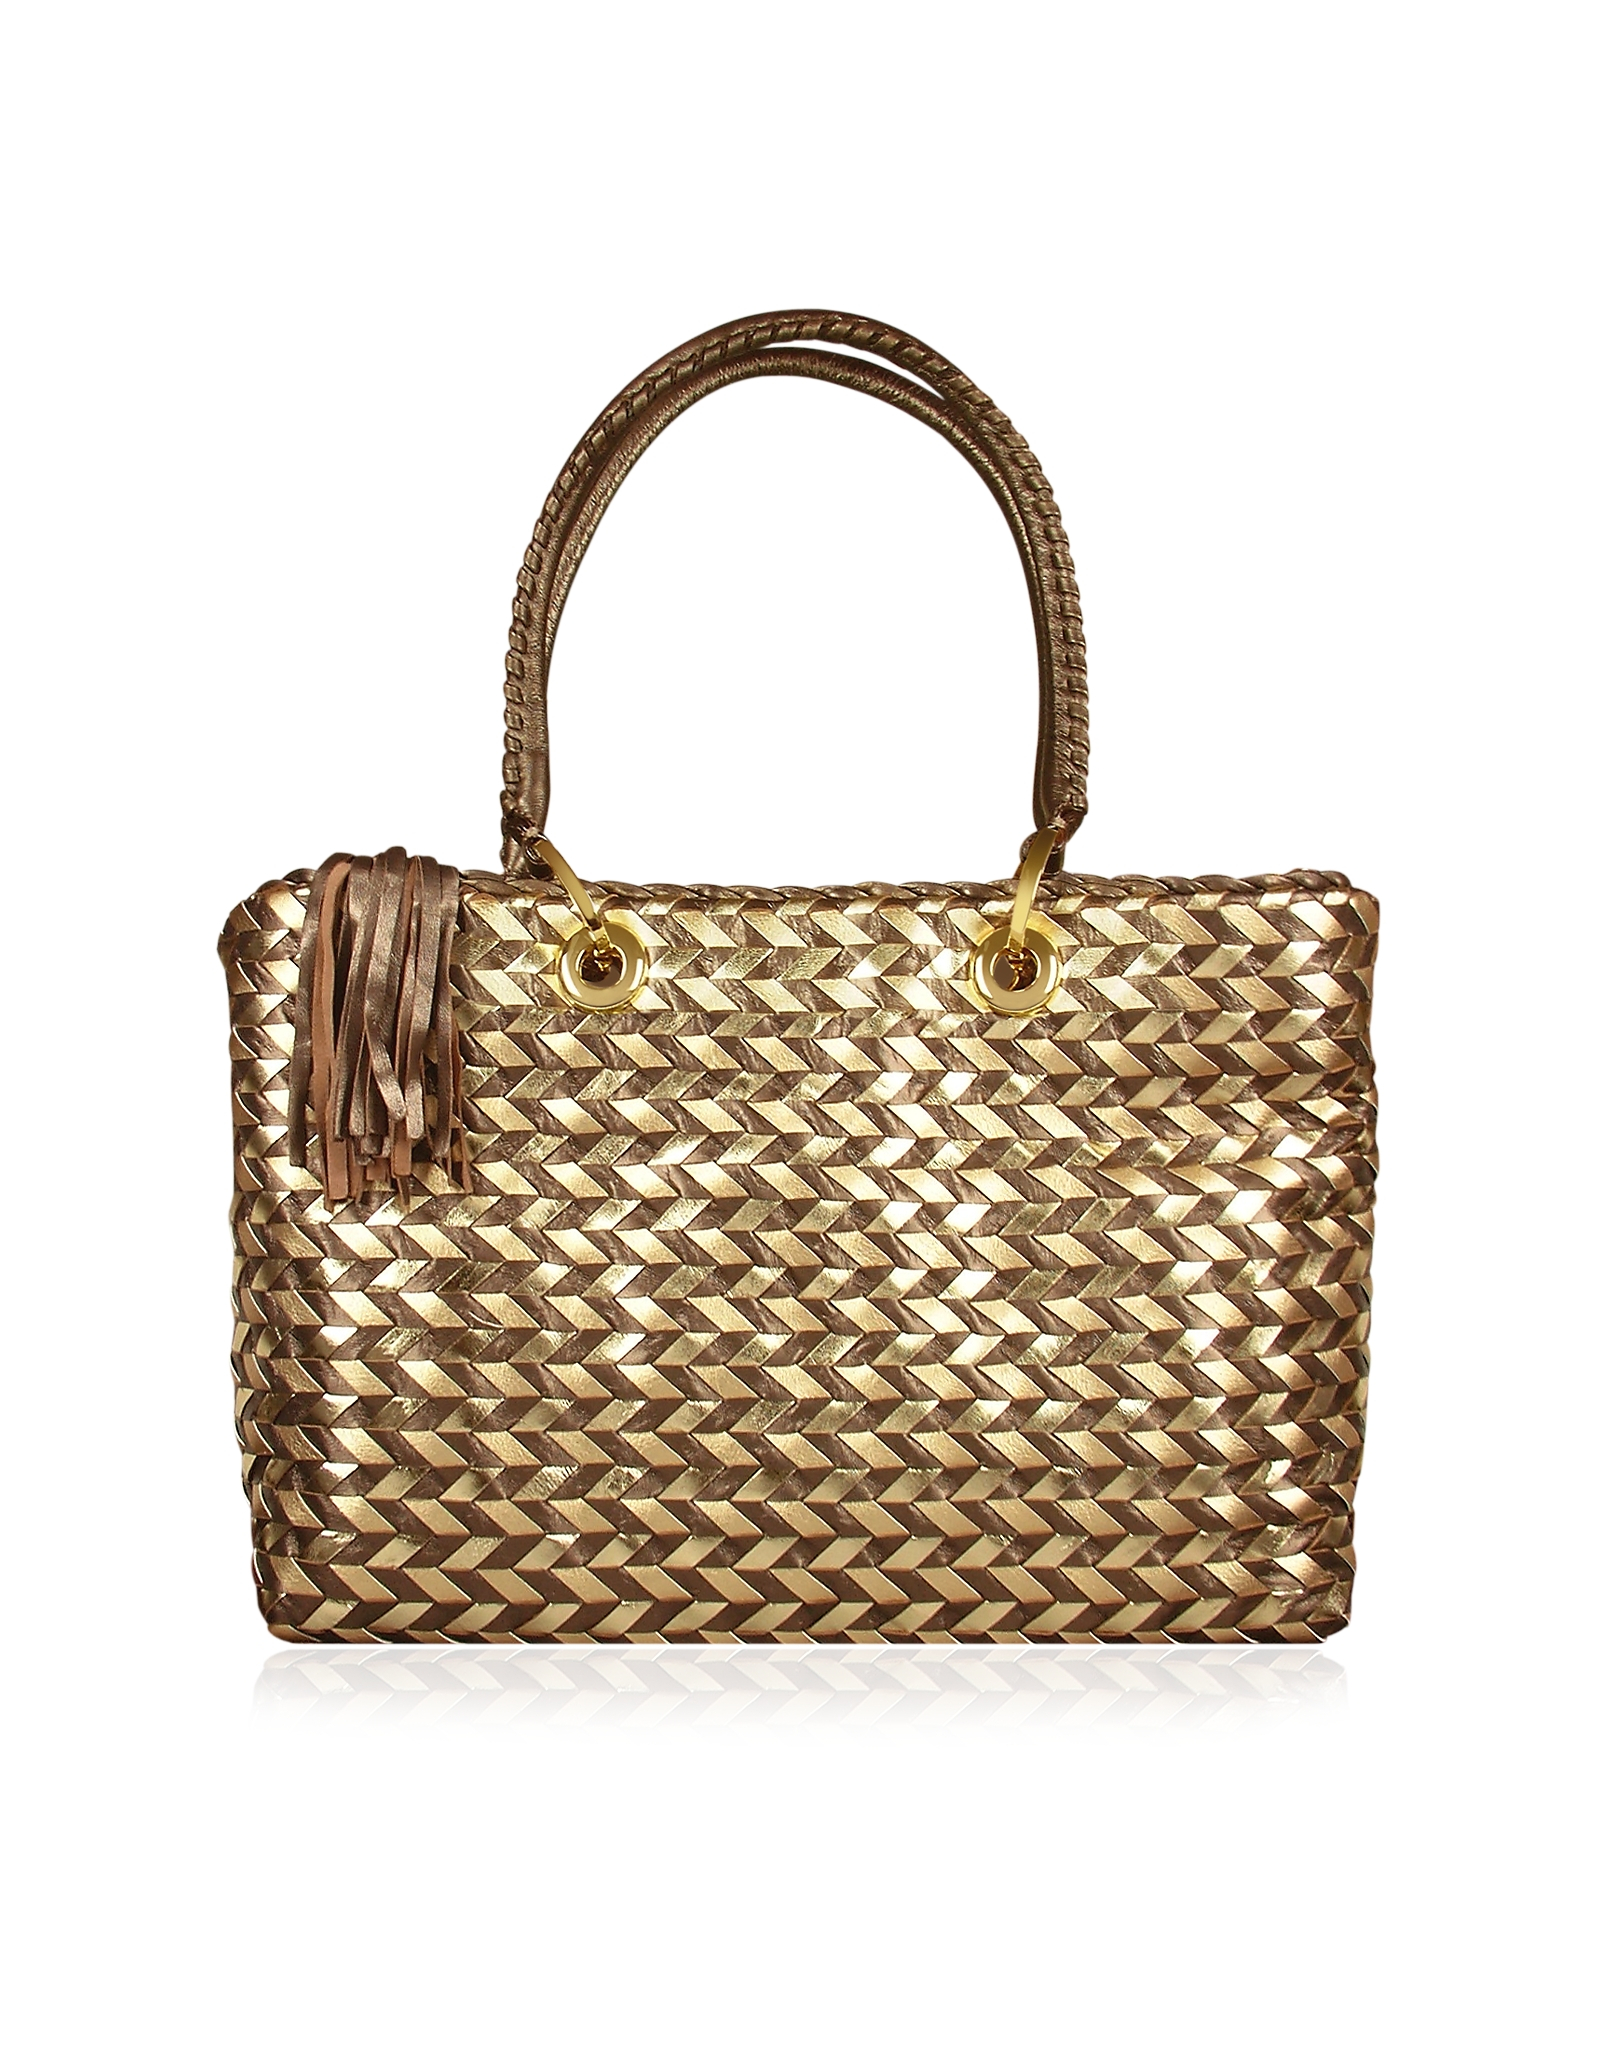 Fontanelli Brown & Gold Woven Italian Leather Large Tote Bag in Metallic - Lyst